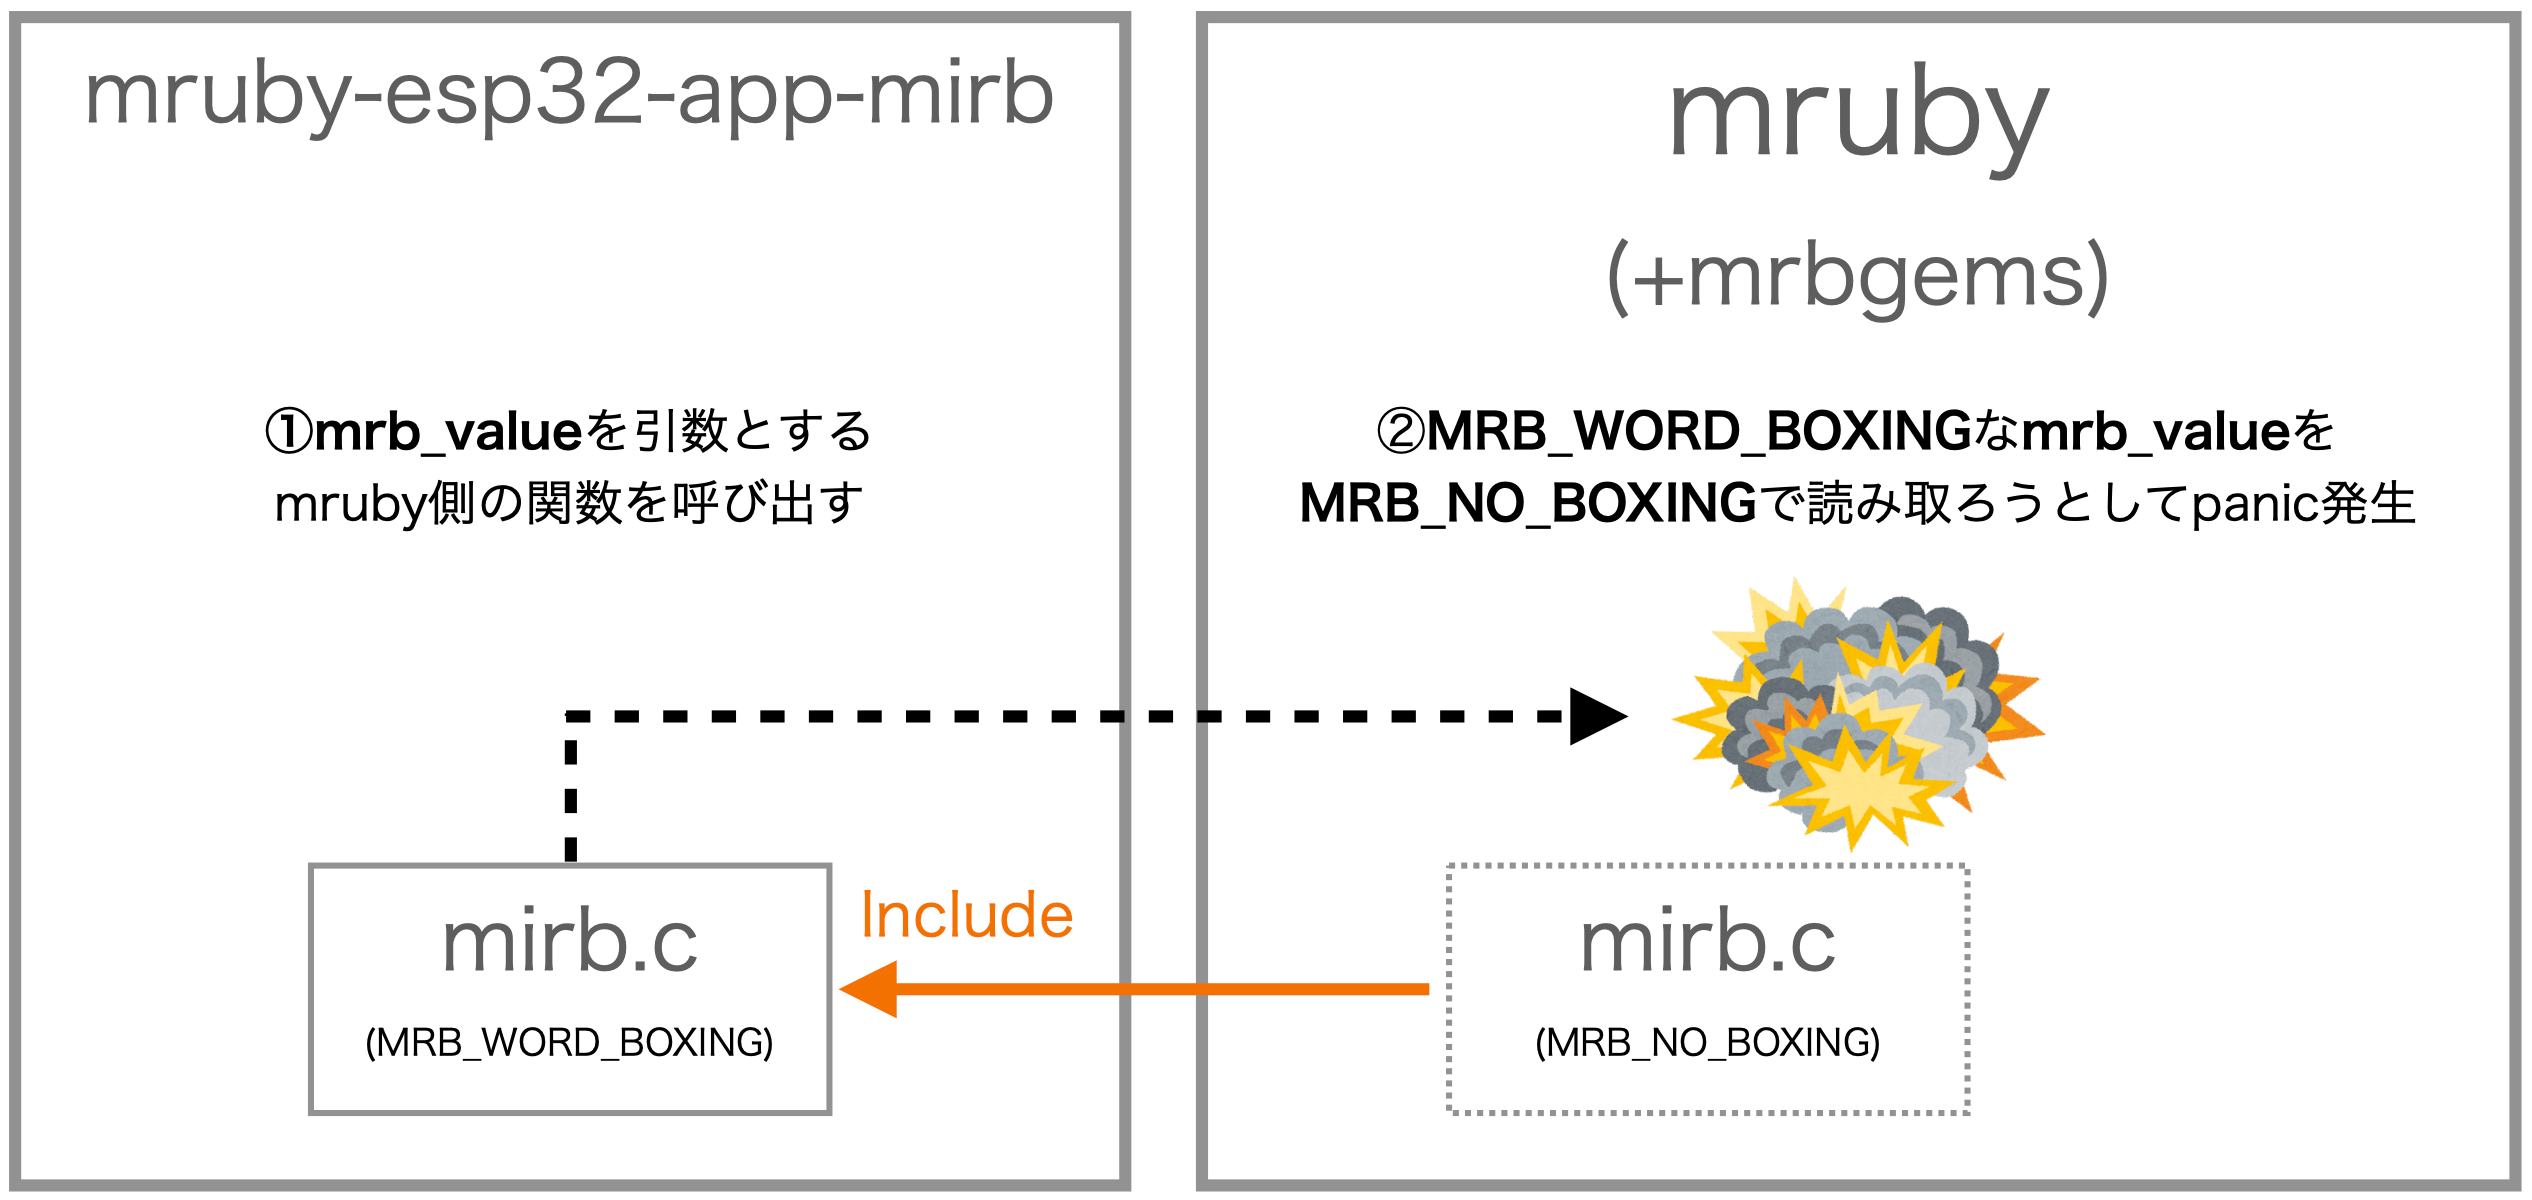 mruby-esp32-app-mirb 不具合発生のメカニズム